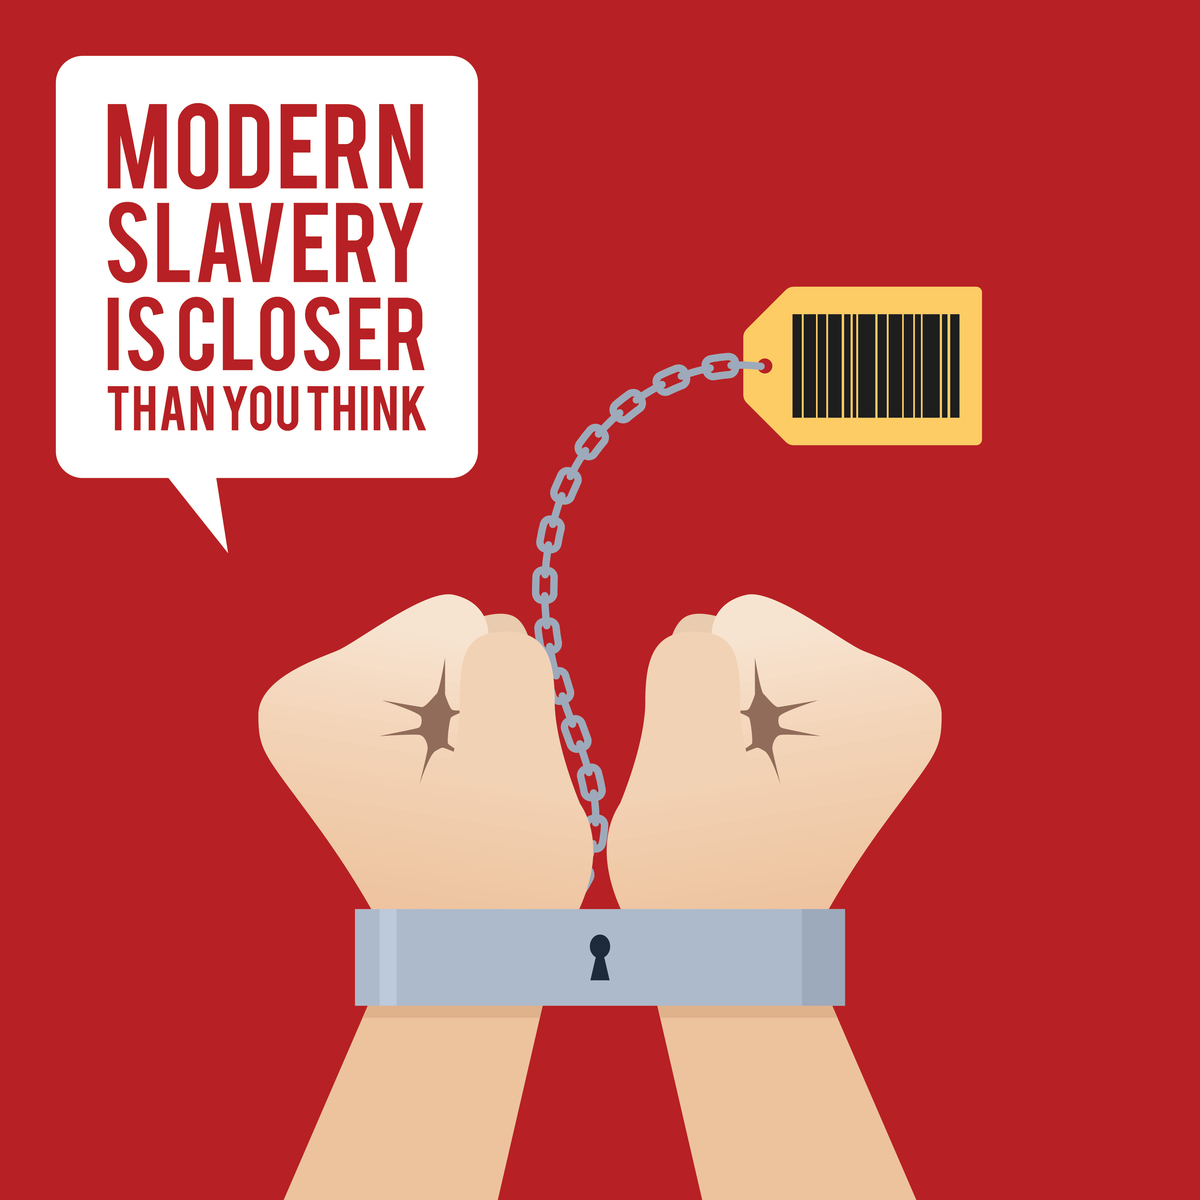 Responding to the Modern Slavery Act 2015